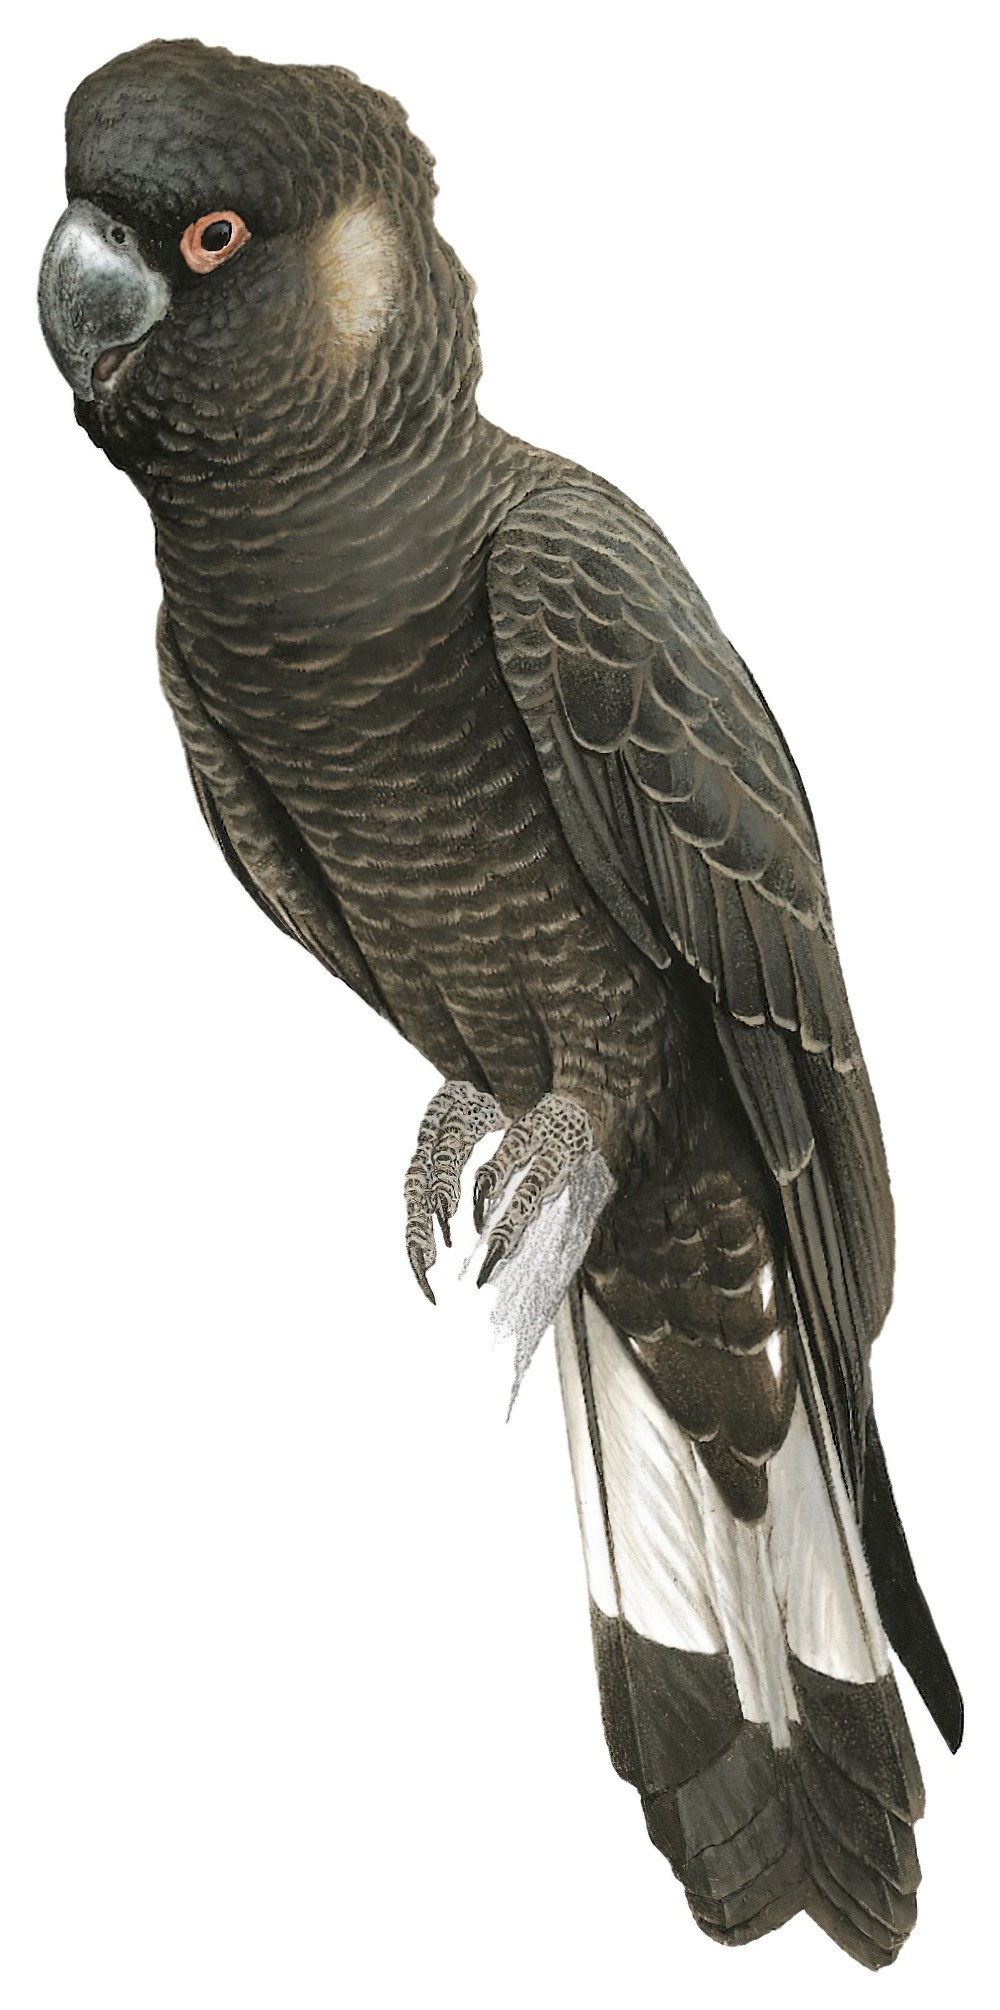 Carnaby\'s Black-Cockatoo / Calyptorhynchus latirostris